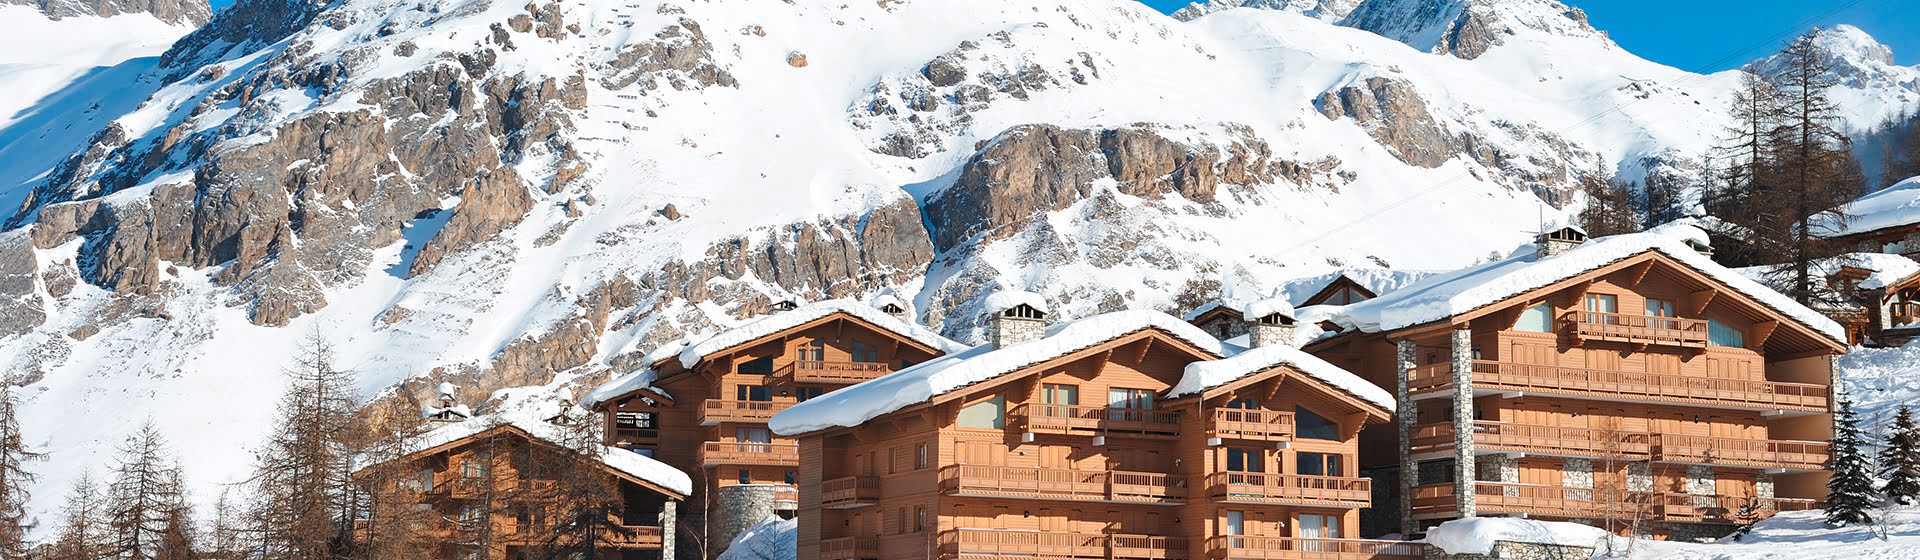 ski-resort-alps-hotels-1920x560